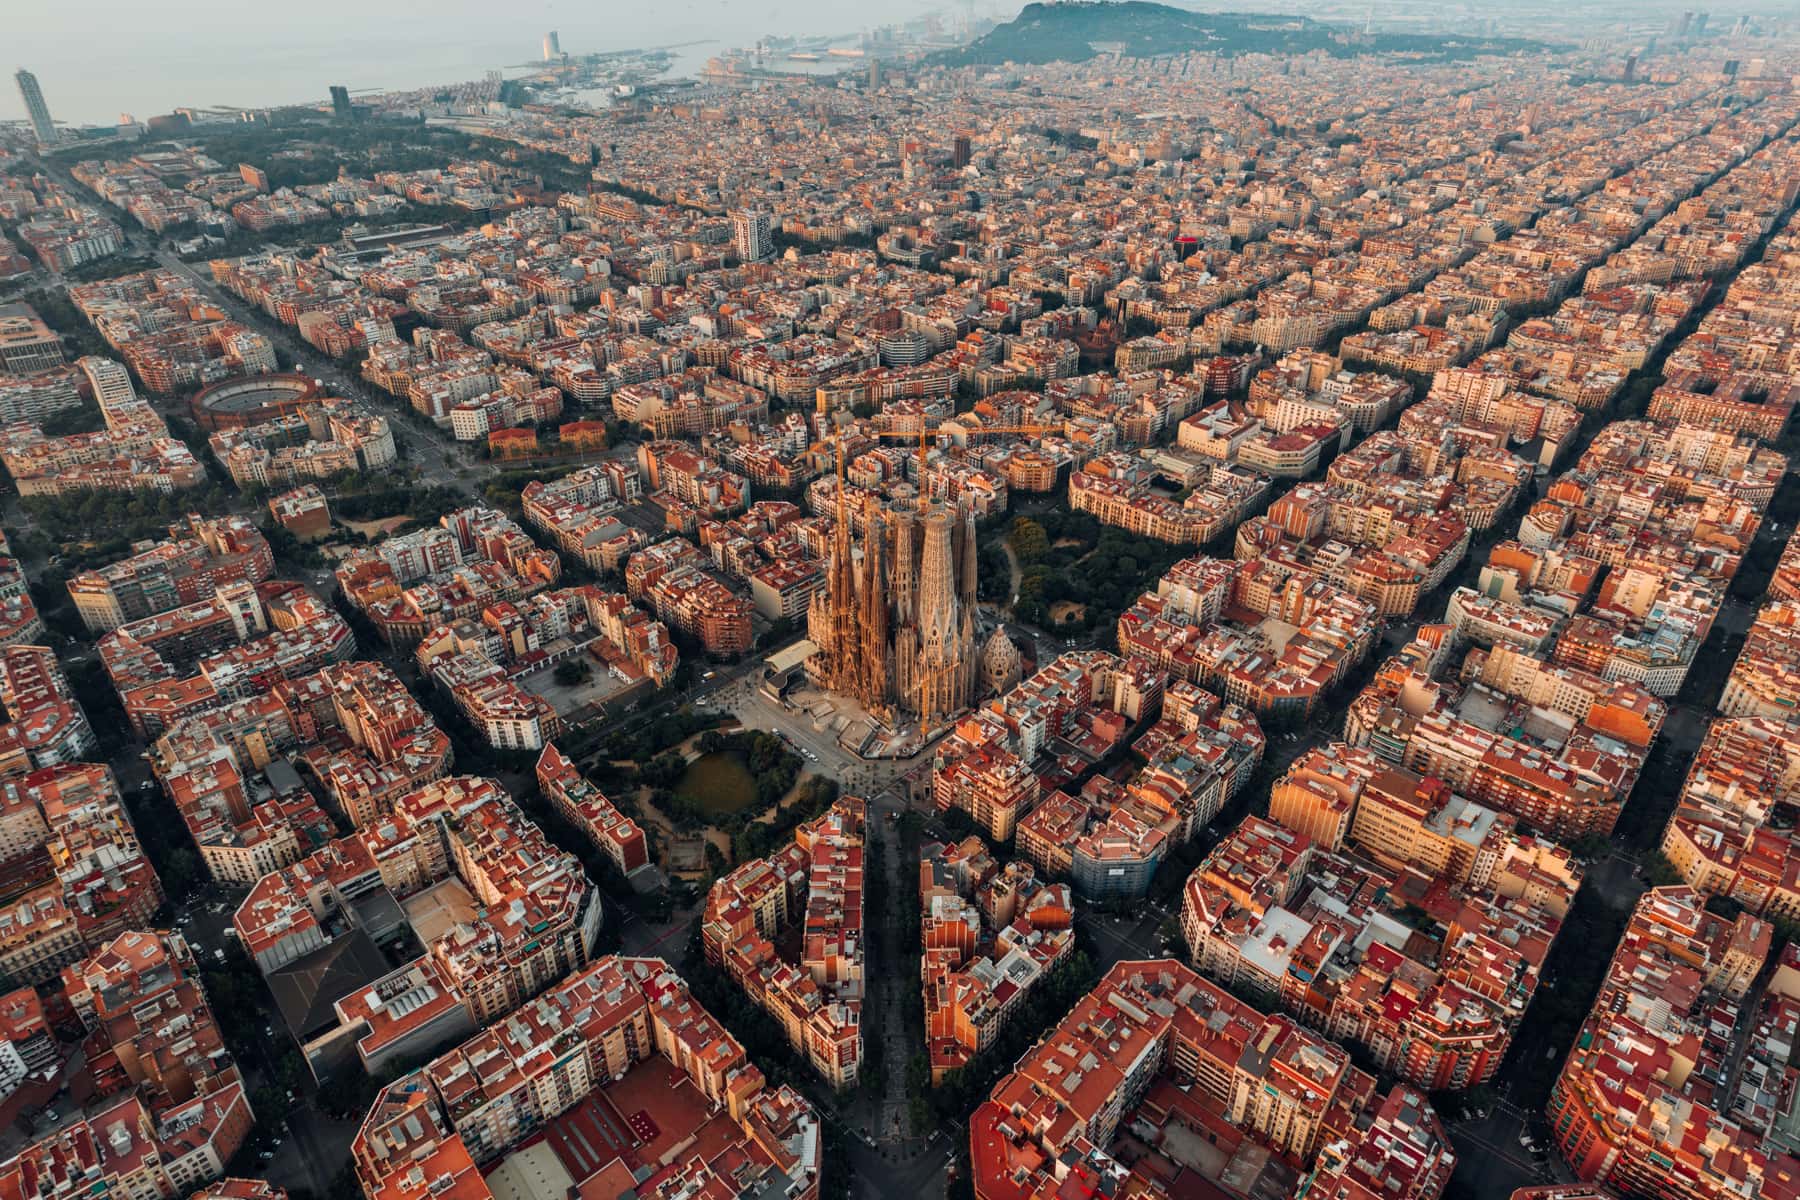 Barcelona sights